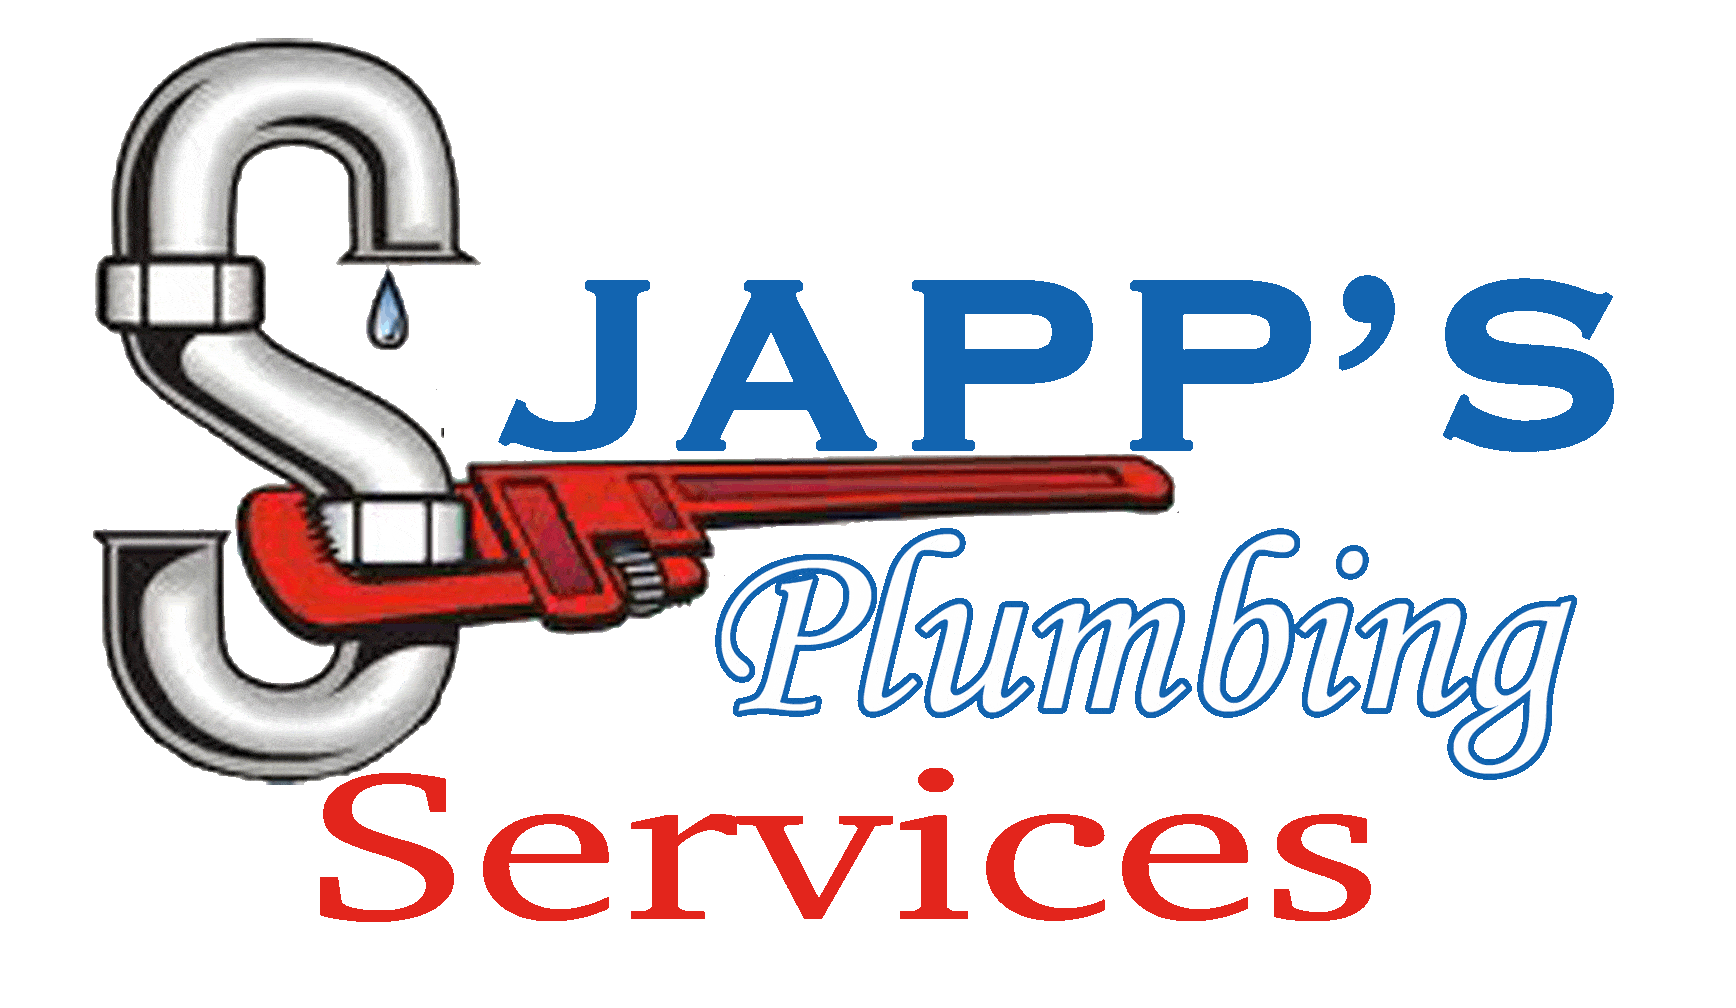 Japp’s Plumbing Services on Lyndhurst Road Kingston Jamaica